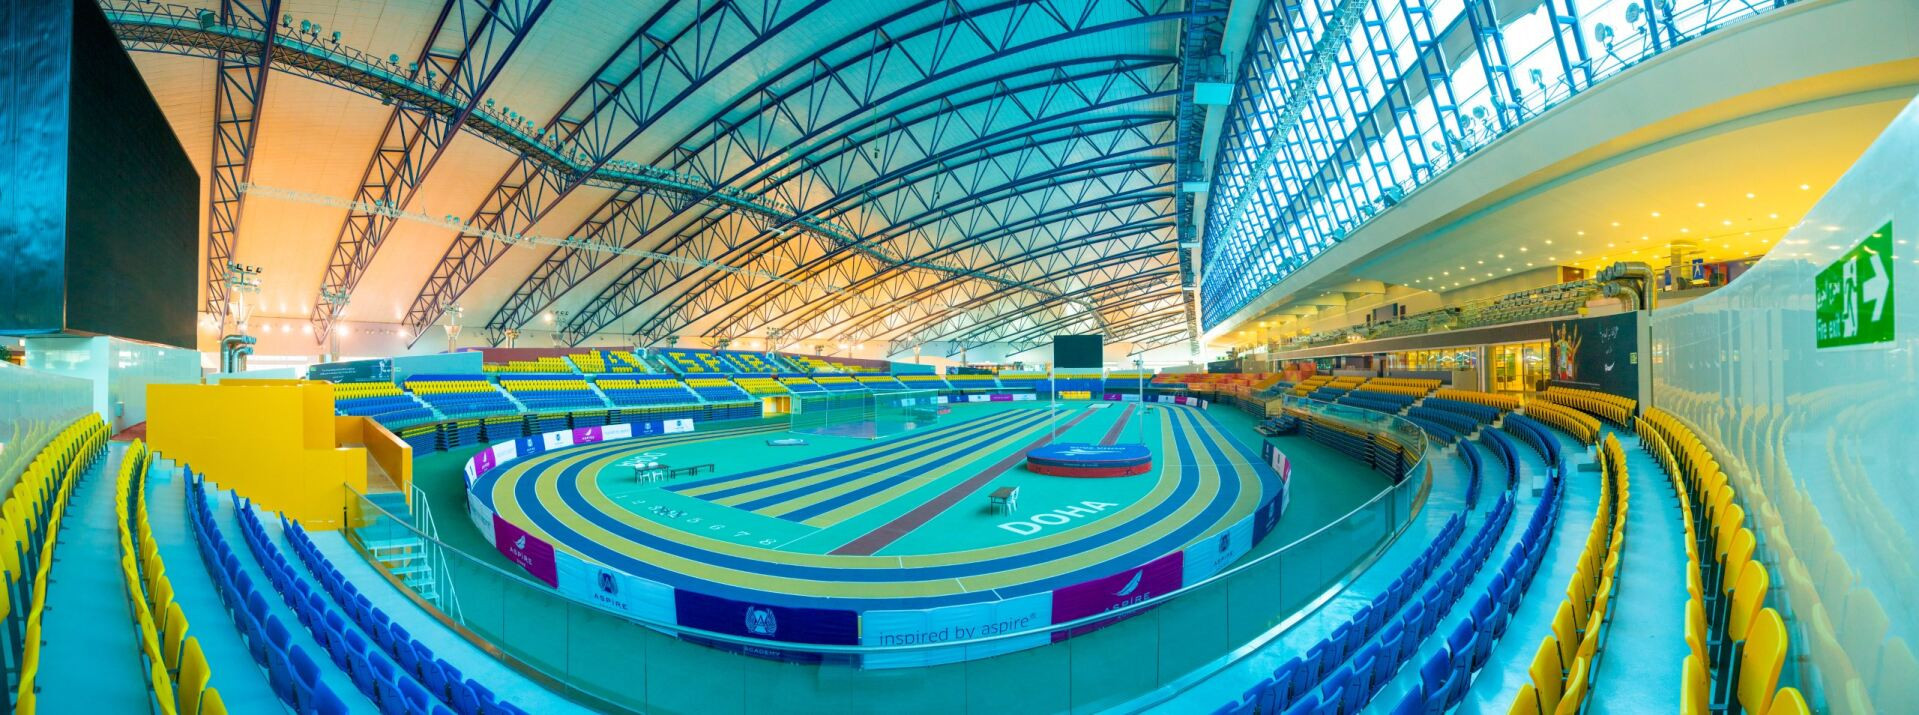 The Aspire Dome is a 40,000 square metre indoor sports arena. WORLD AQUATICS